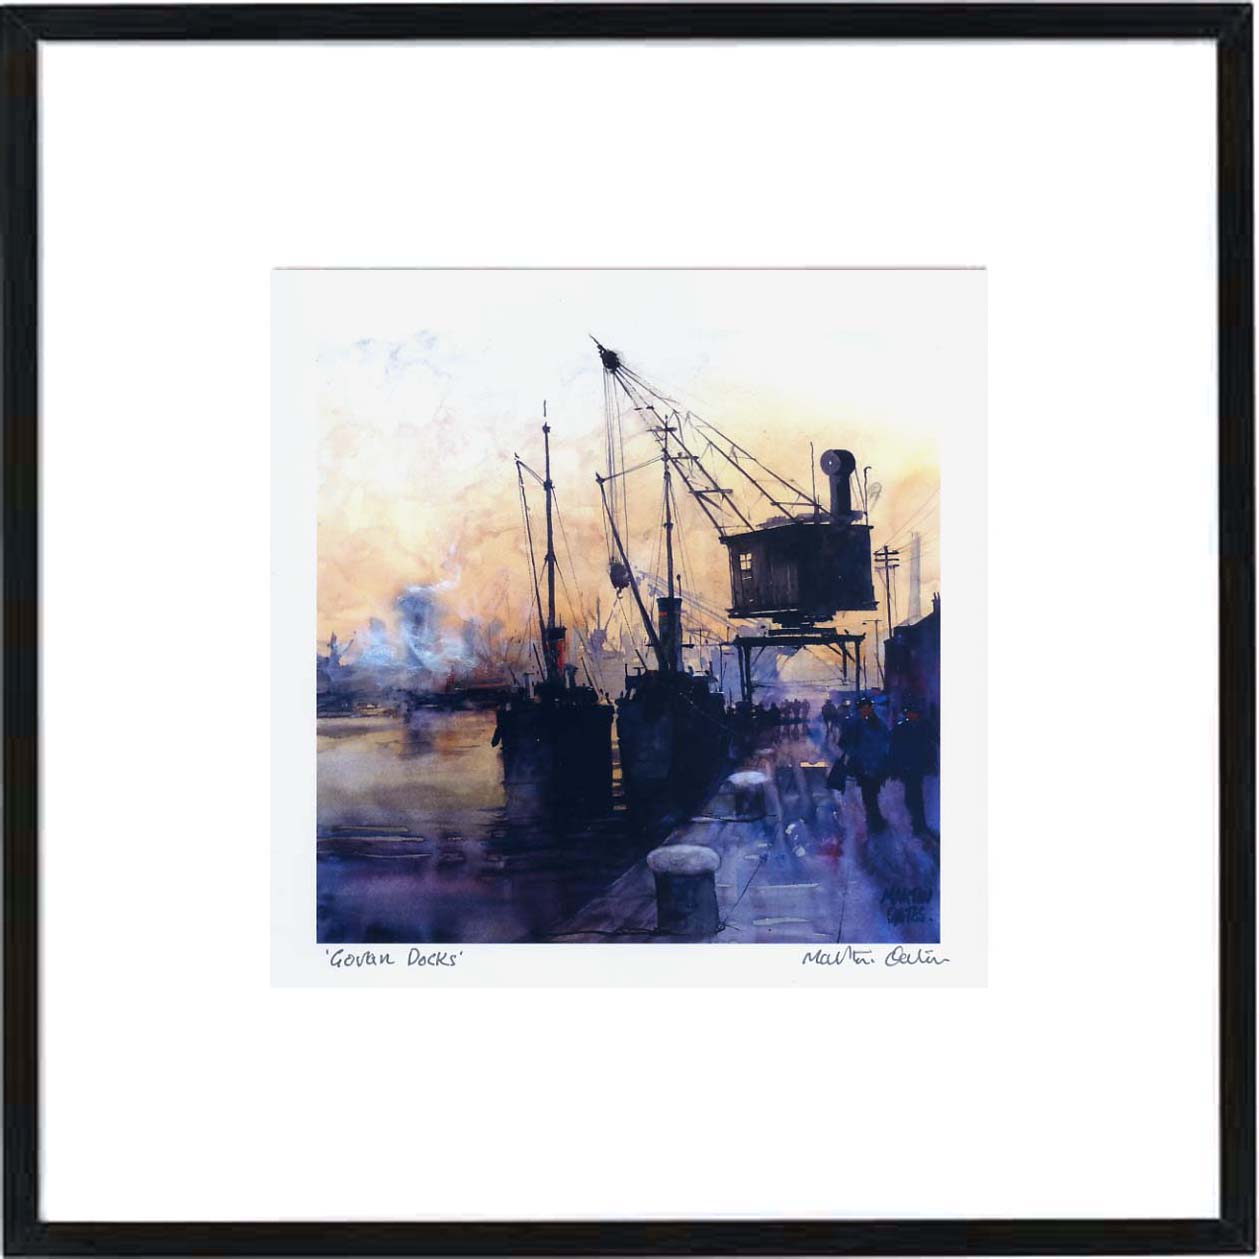 Govan Docks Framed Print